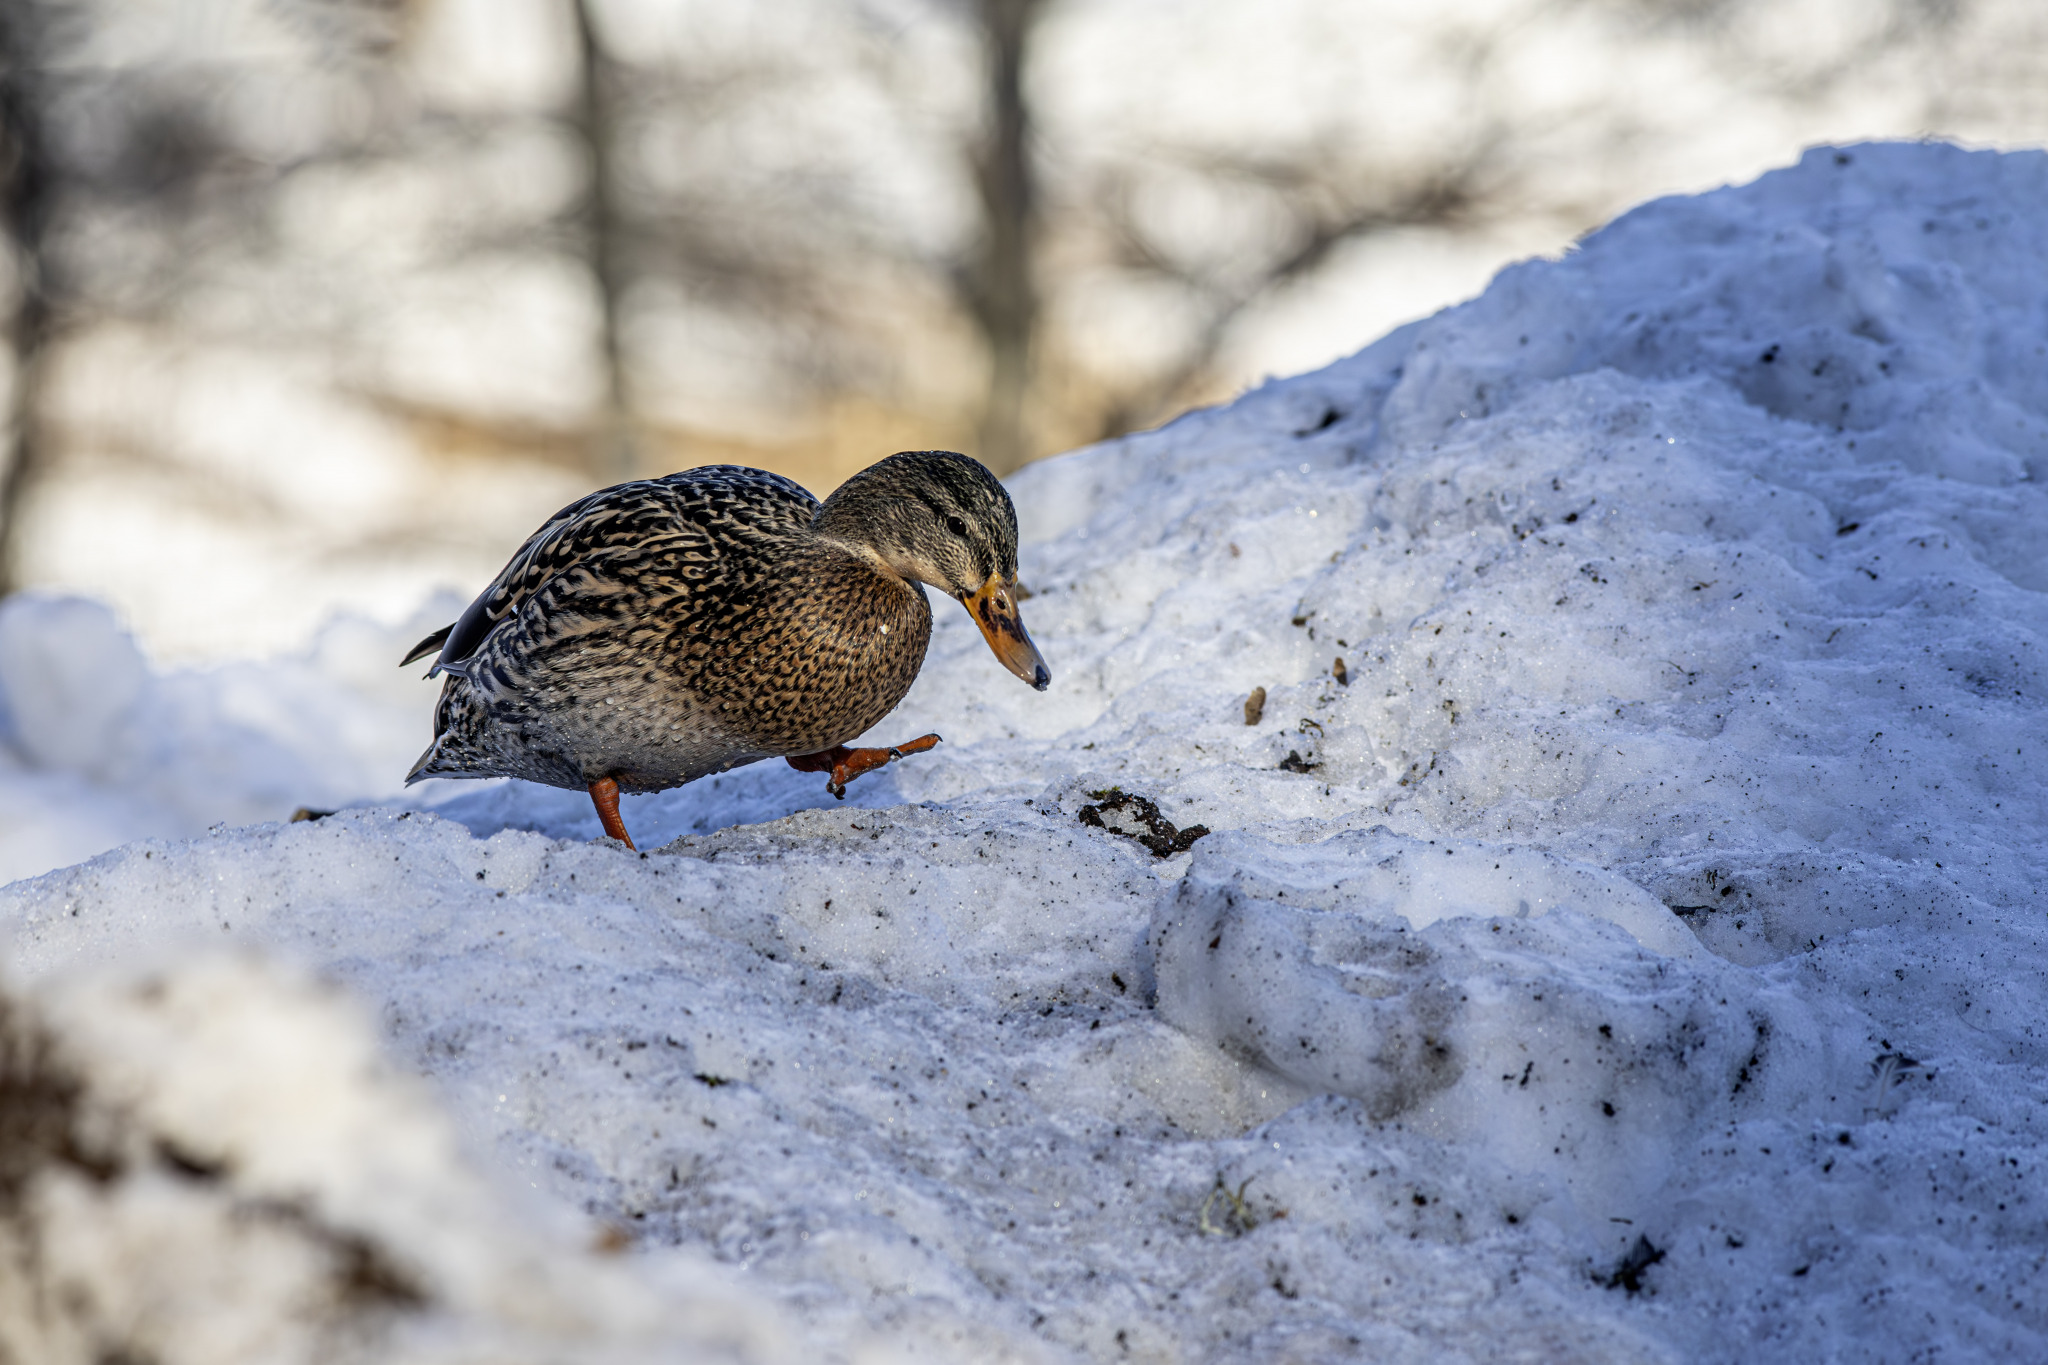 Female duck in snow